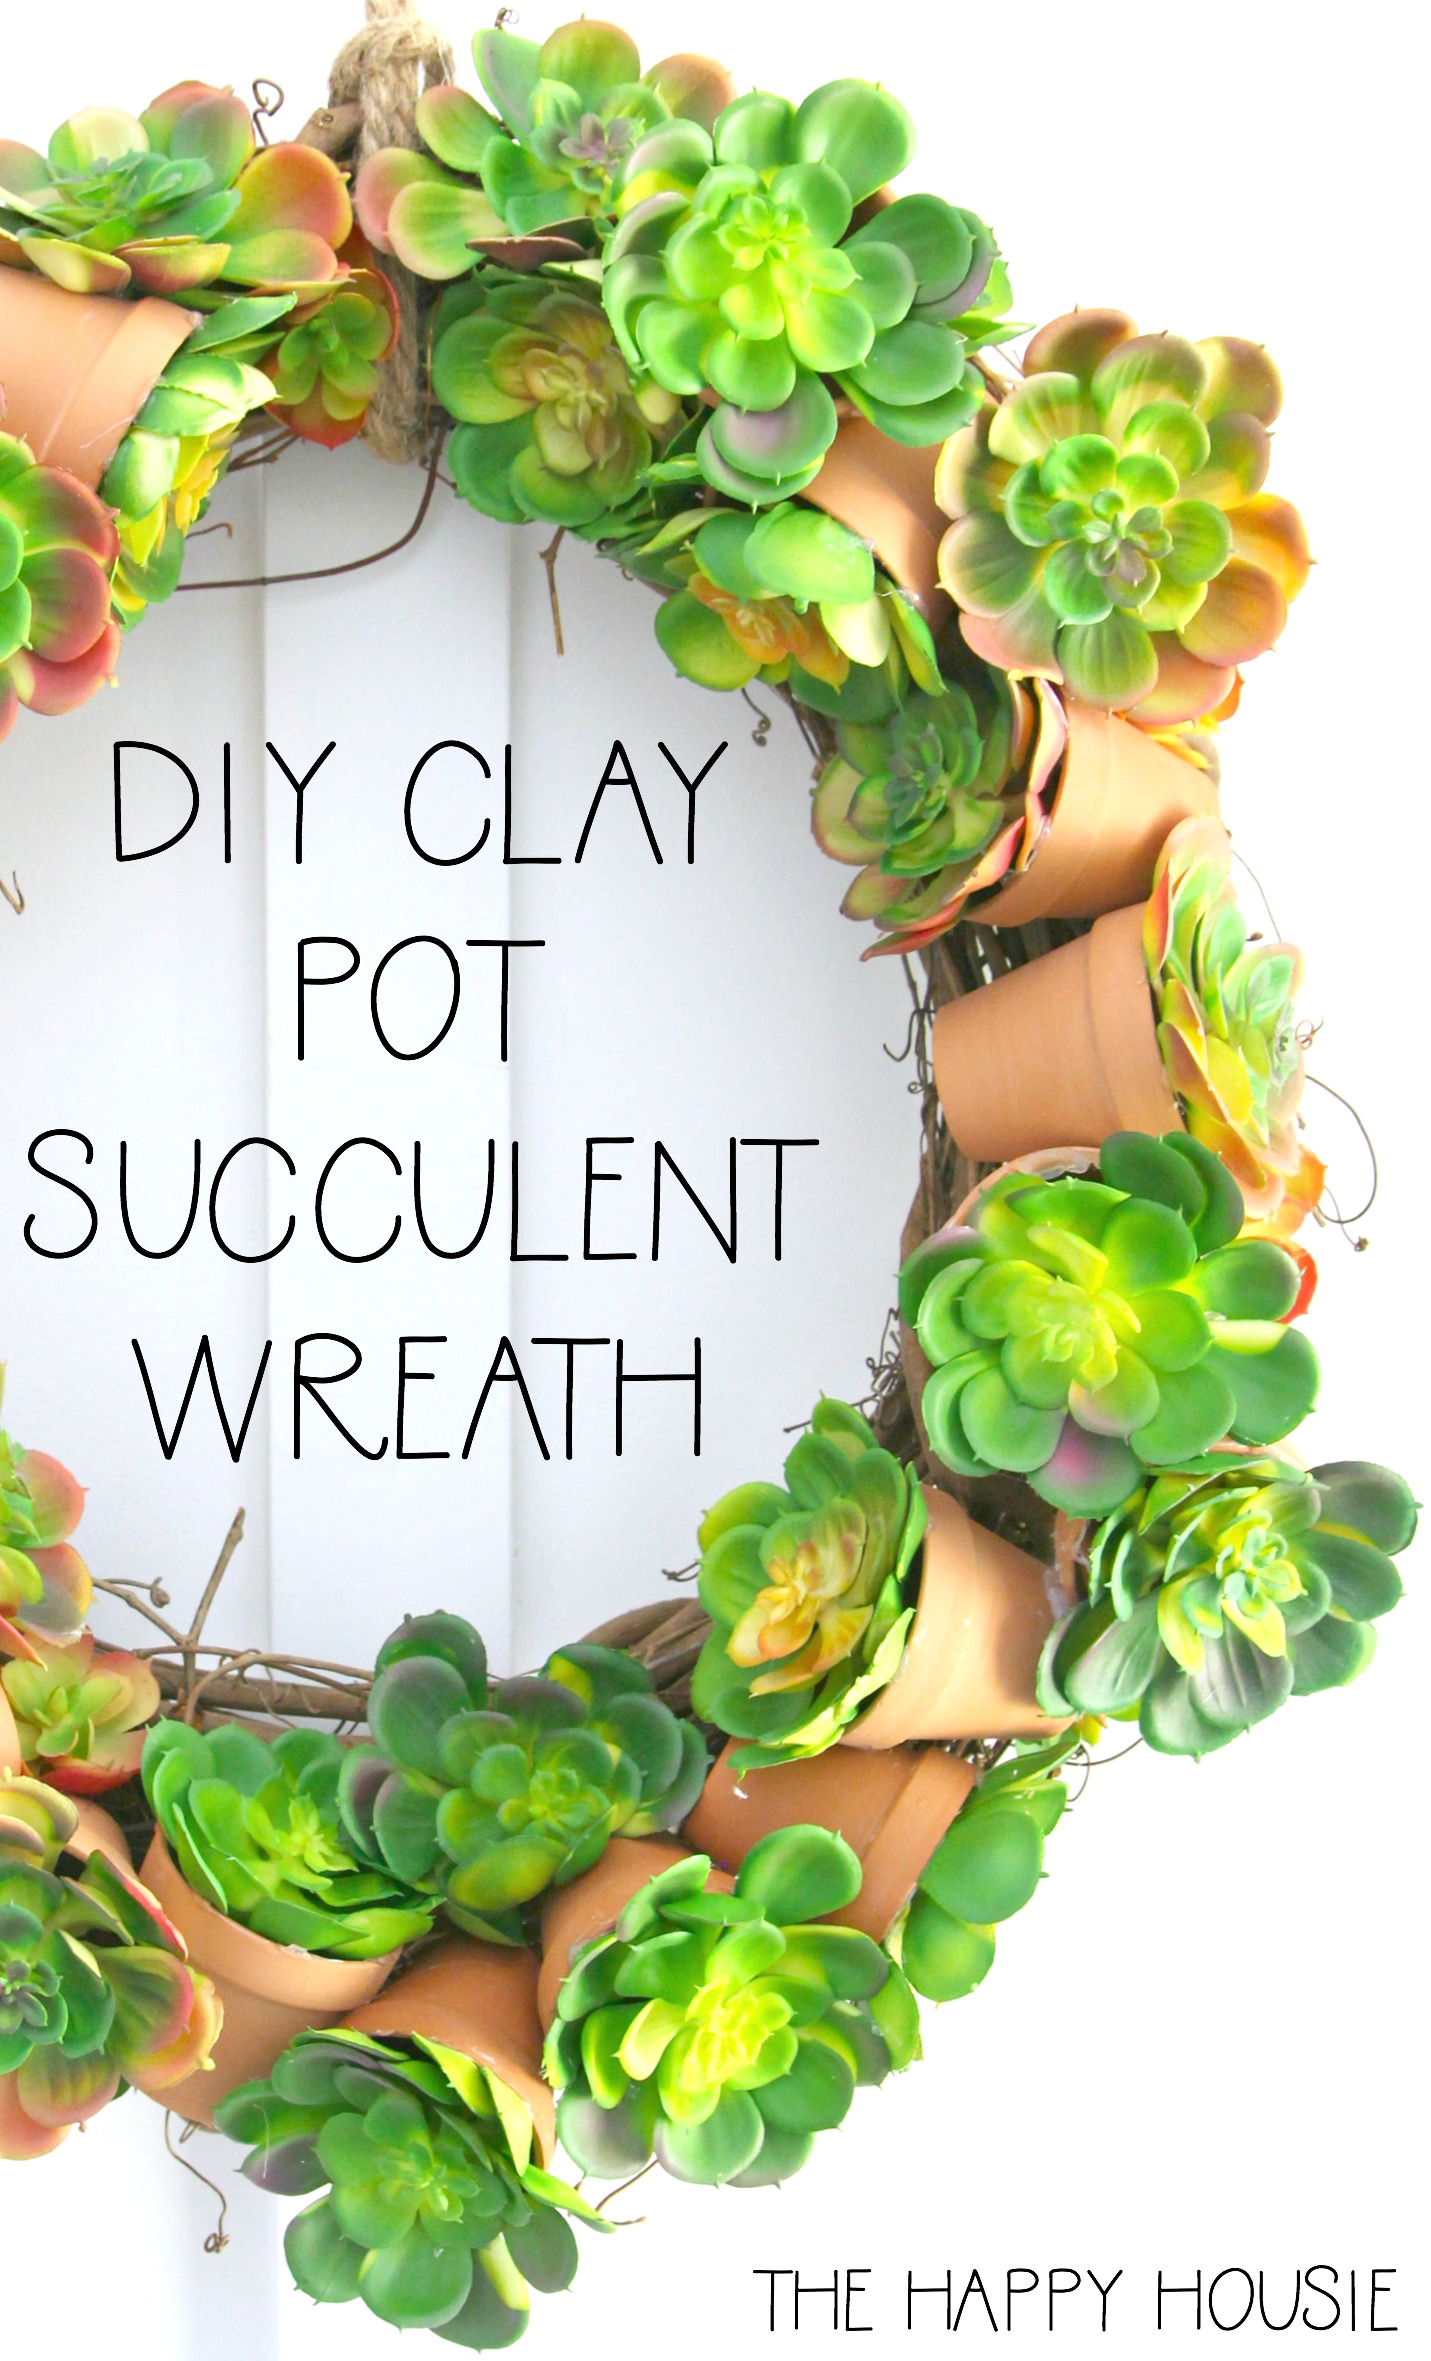 DIY clay pot succulent wreath graphic.